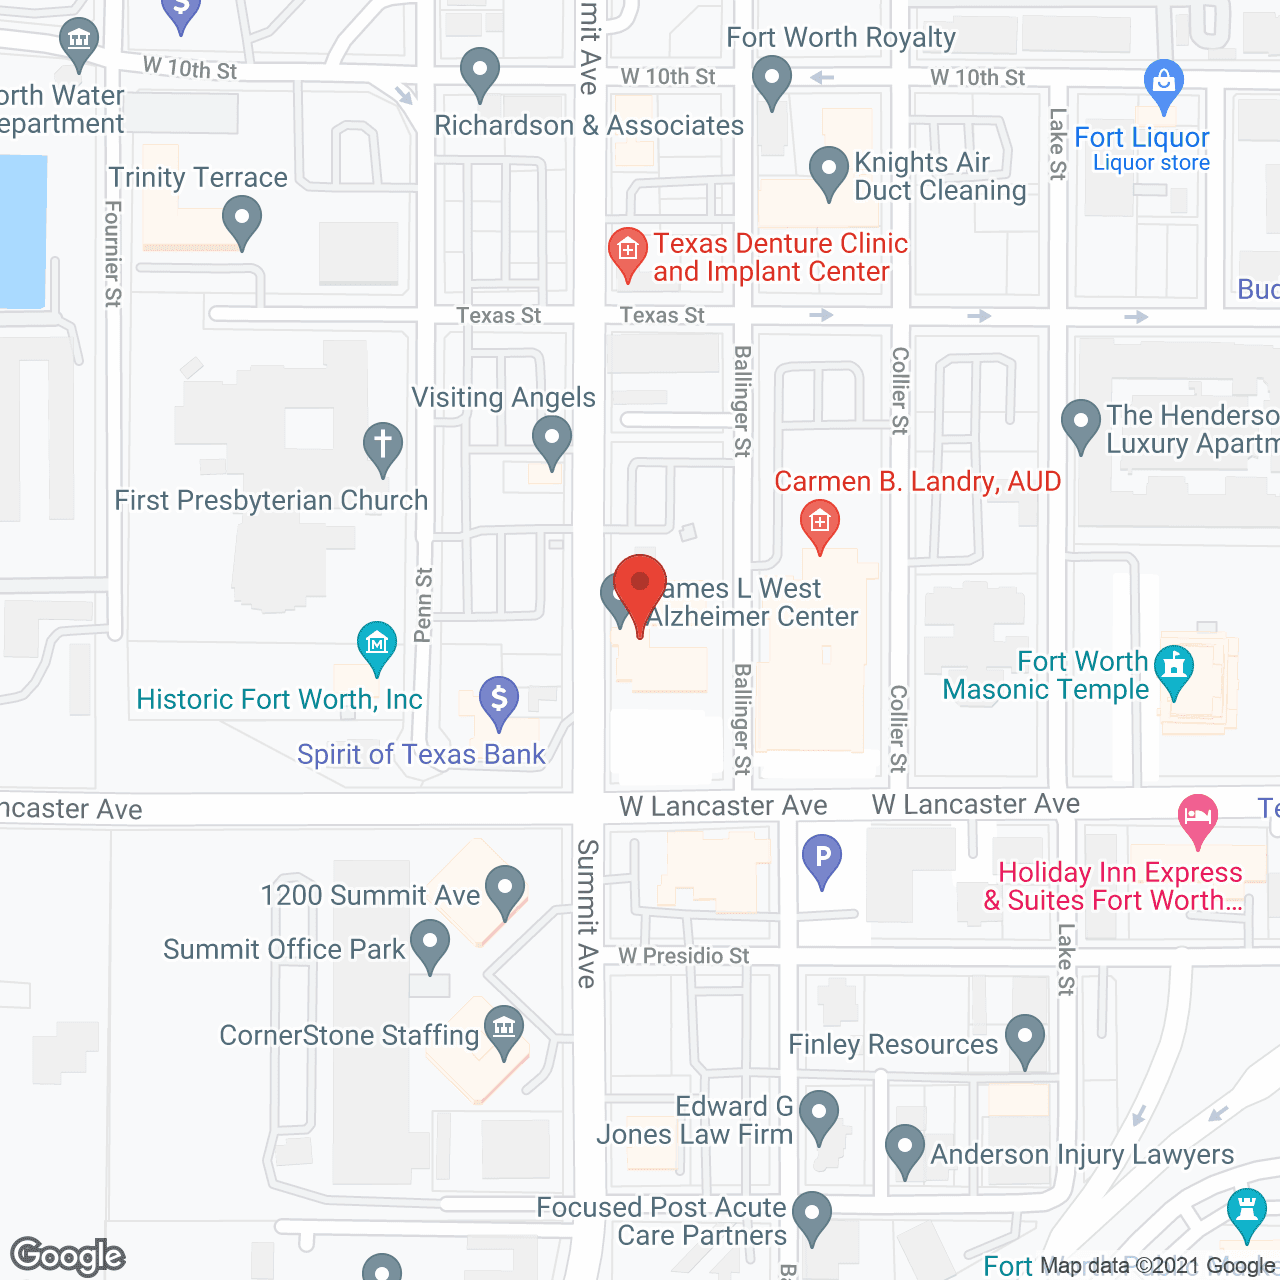 James L West Alzheimer's Center in google map